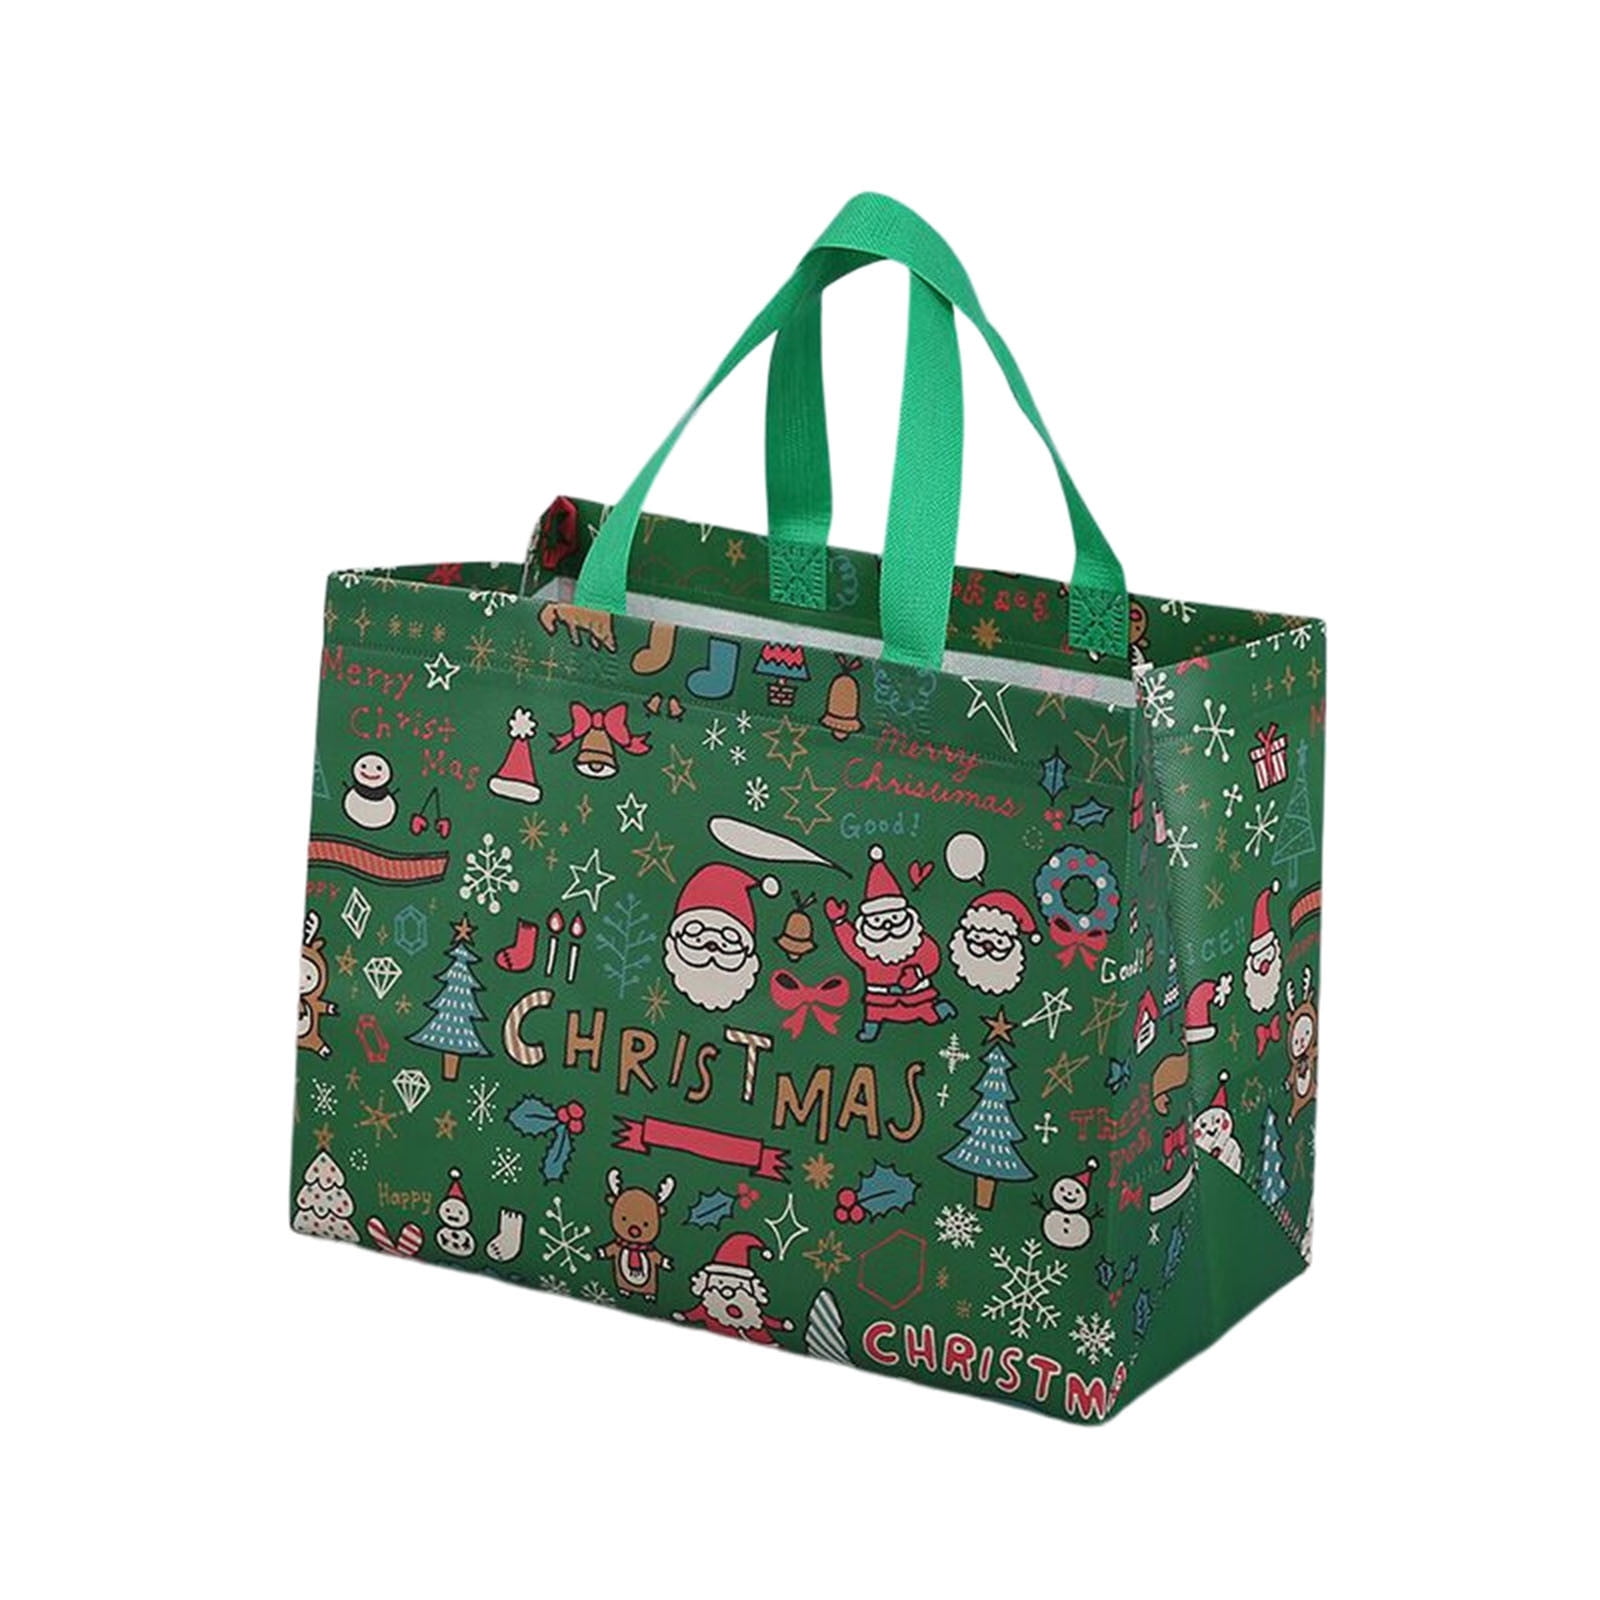 Keeping It Reel Tote Bag, Funny Tote Gift, Shoulder Bag, Reusable Bags,  Birthday Christmas Basket Gag Gift Idea